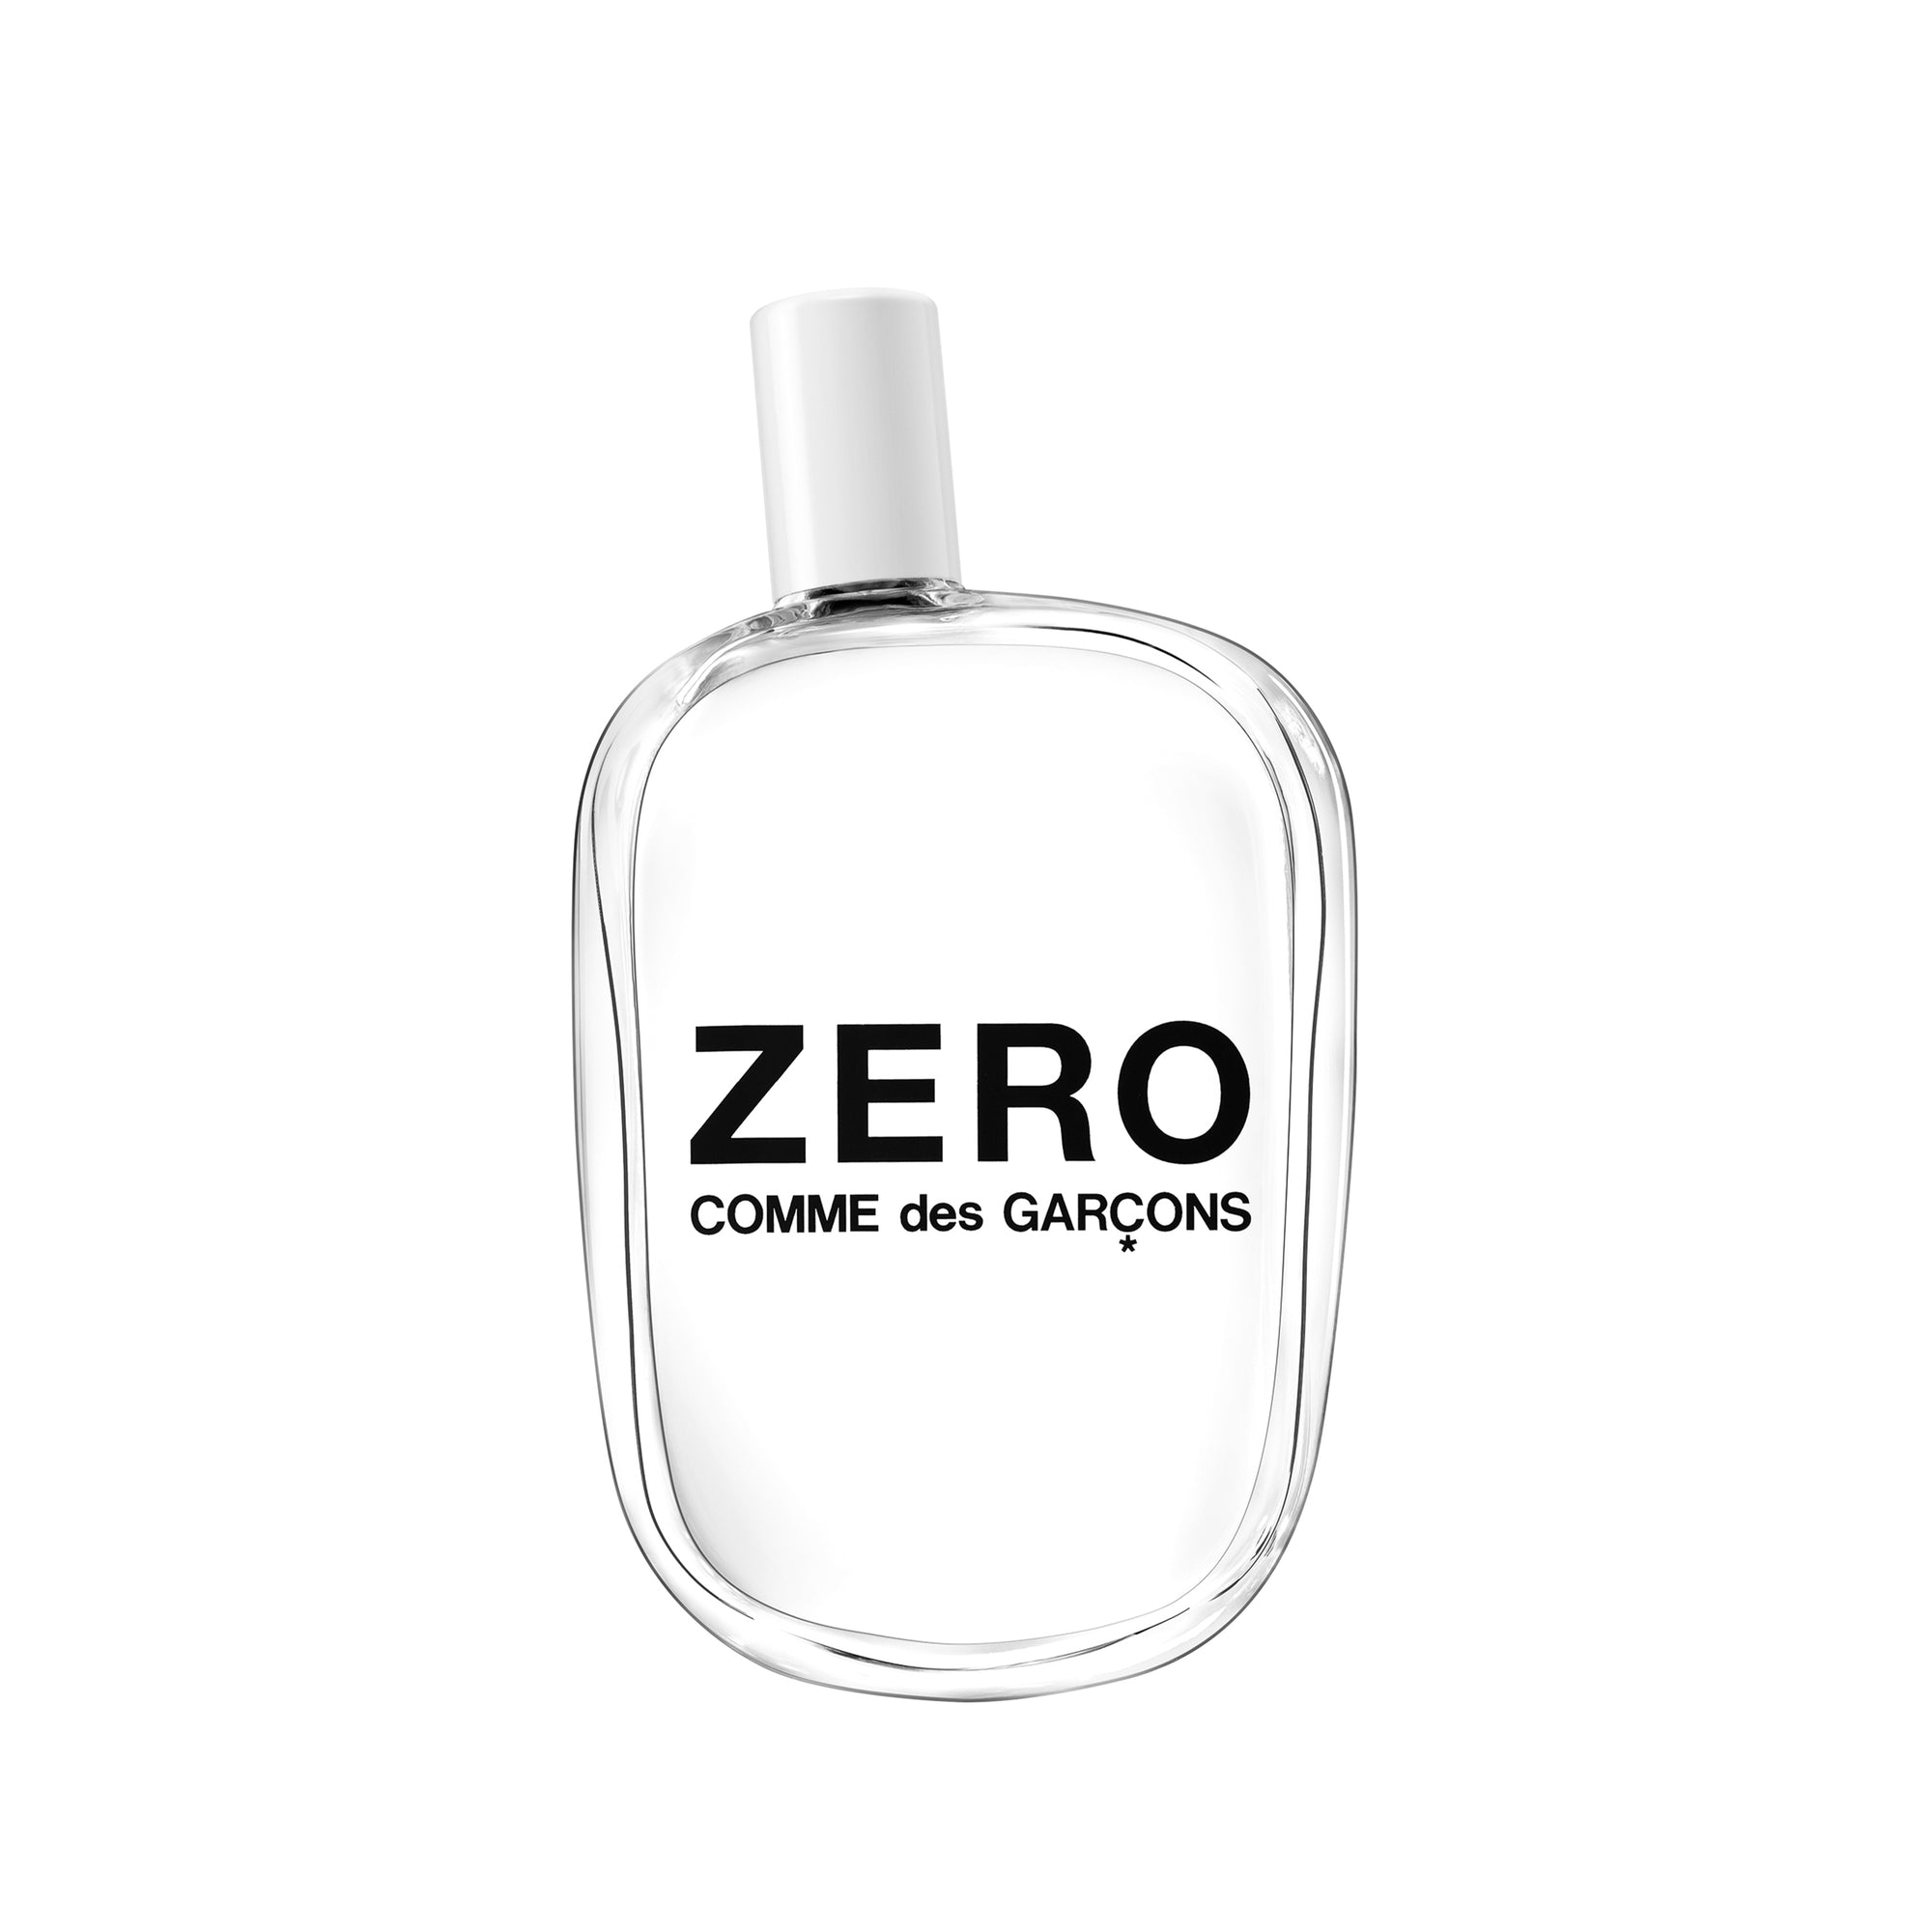 CDG Parfum - Zero Eau de Parfum - (100ML Natural Spray) view 1